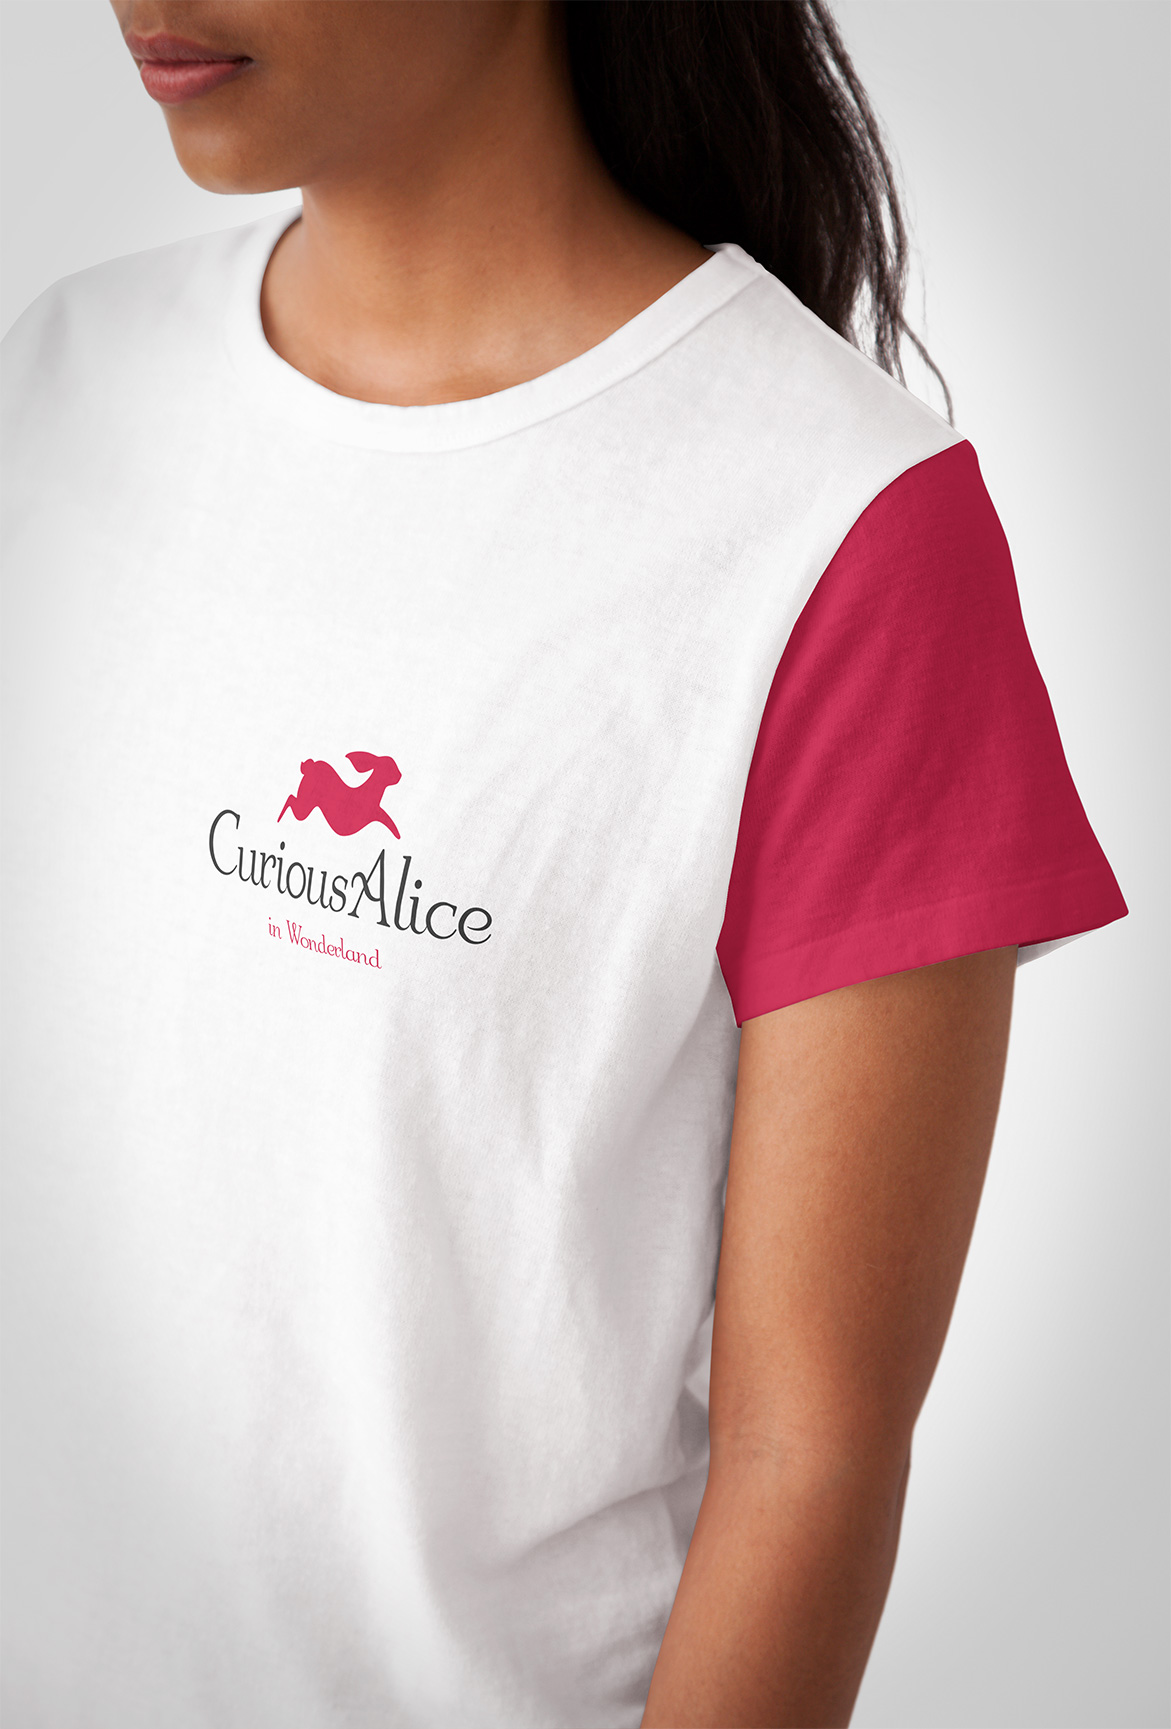 Curious Alice Logo design on tshirt